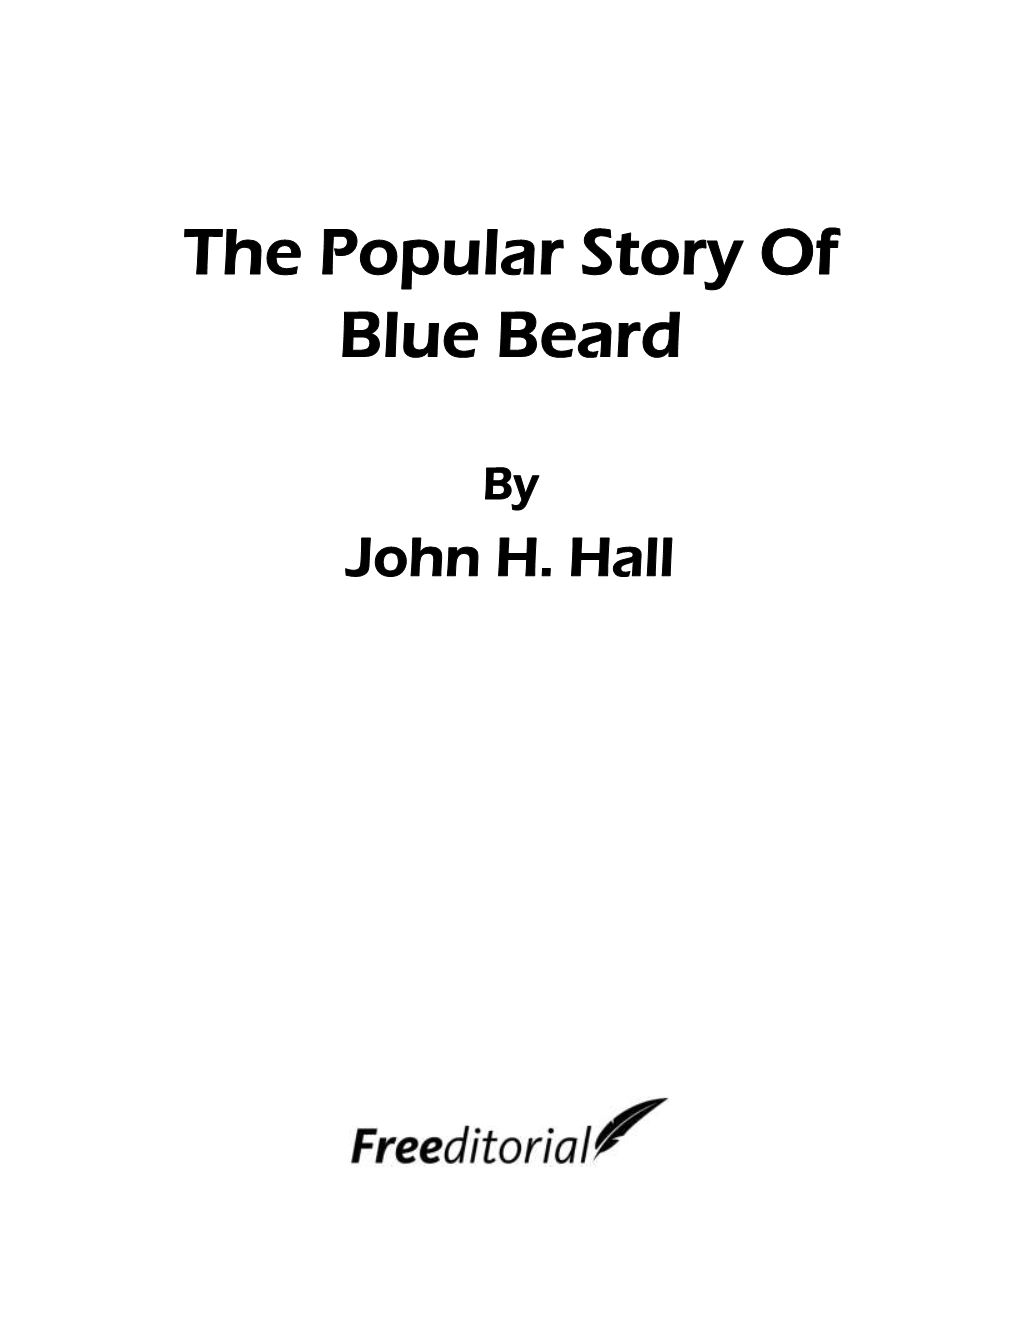 The Popular Story of Blue Beard